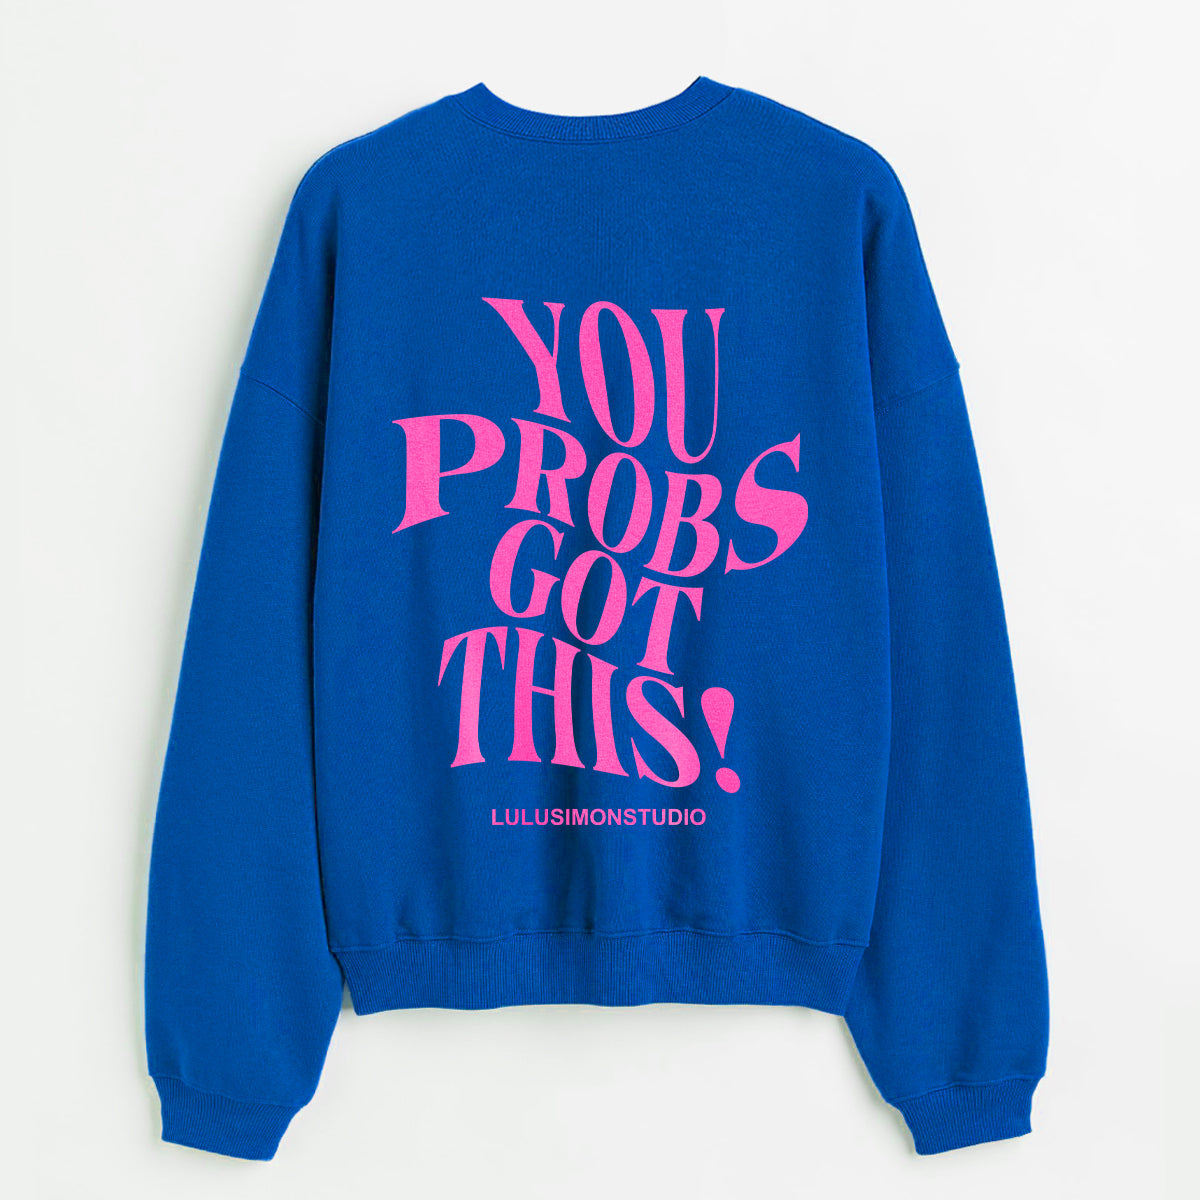 You Probs Got This Sweatshirt